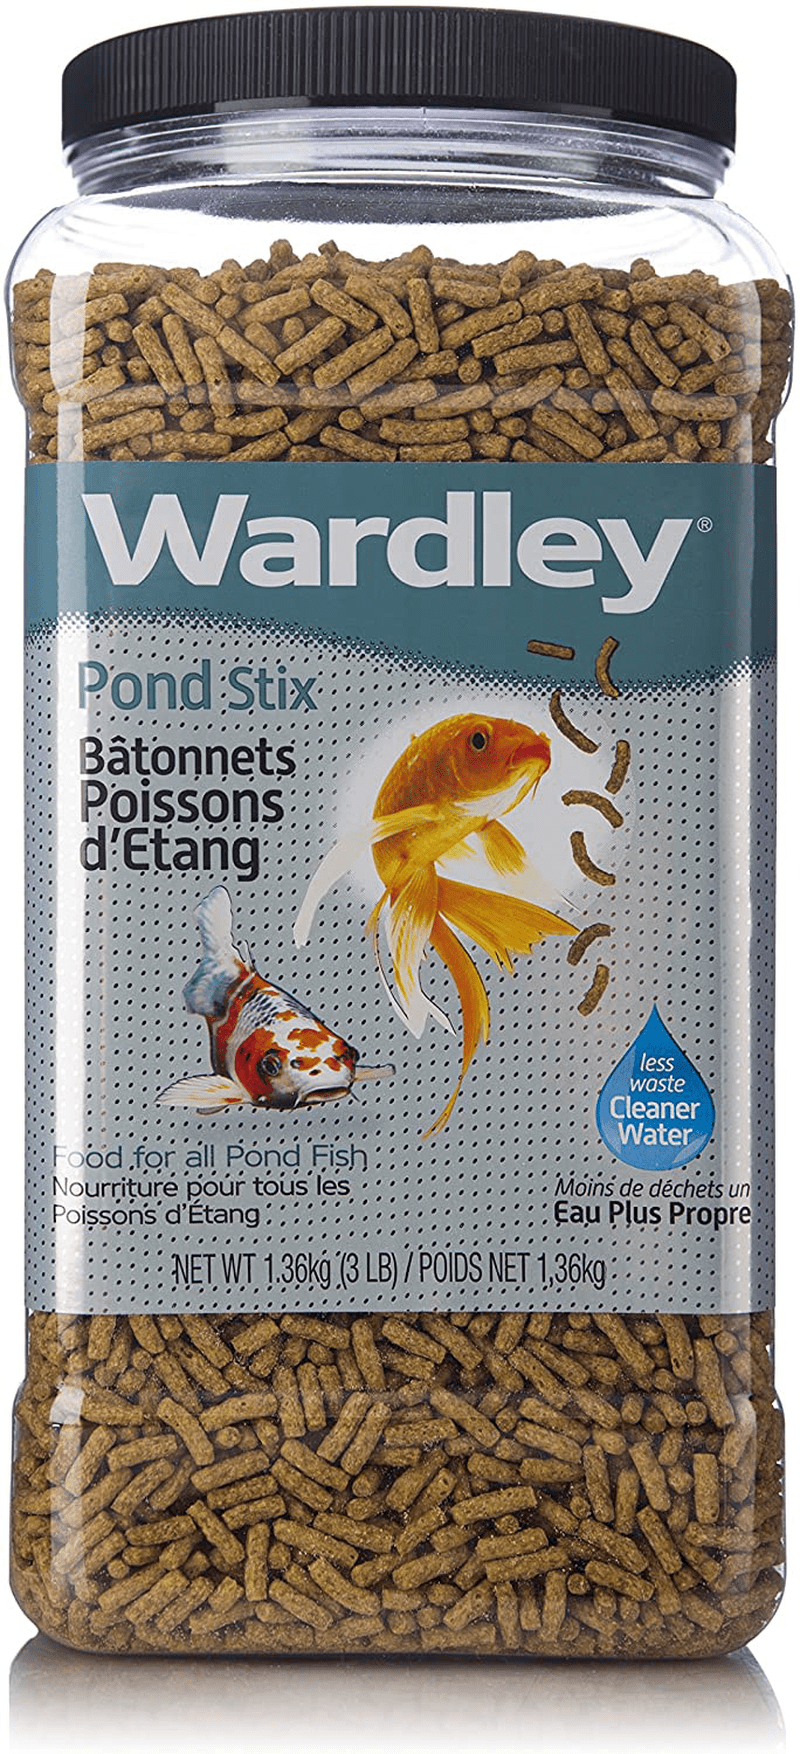 Wardley Pond Fish Food Pellets